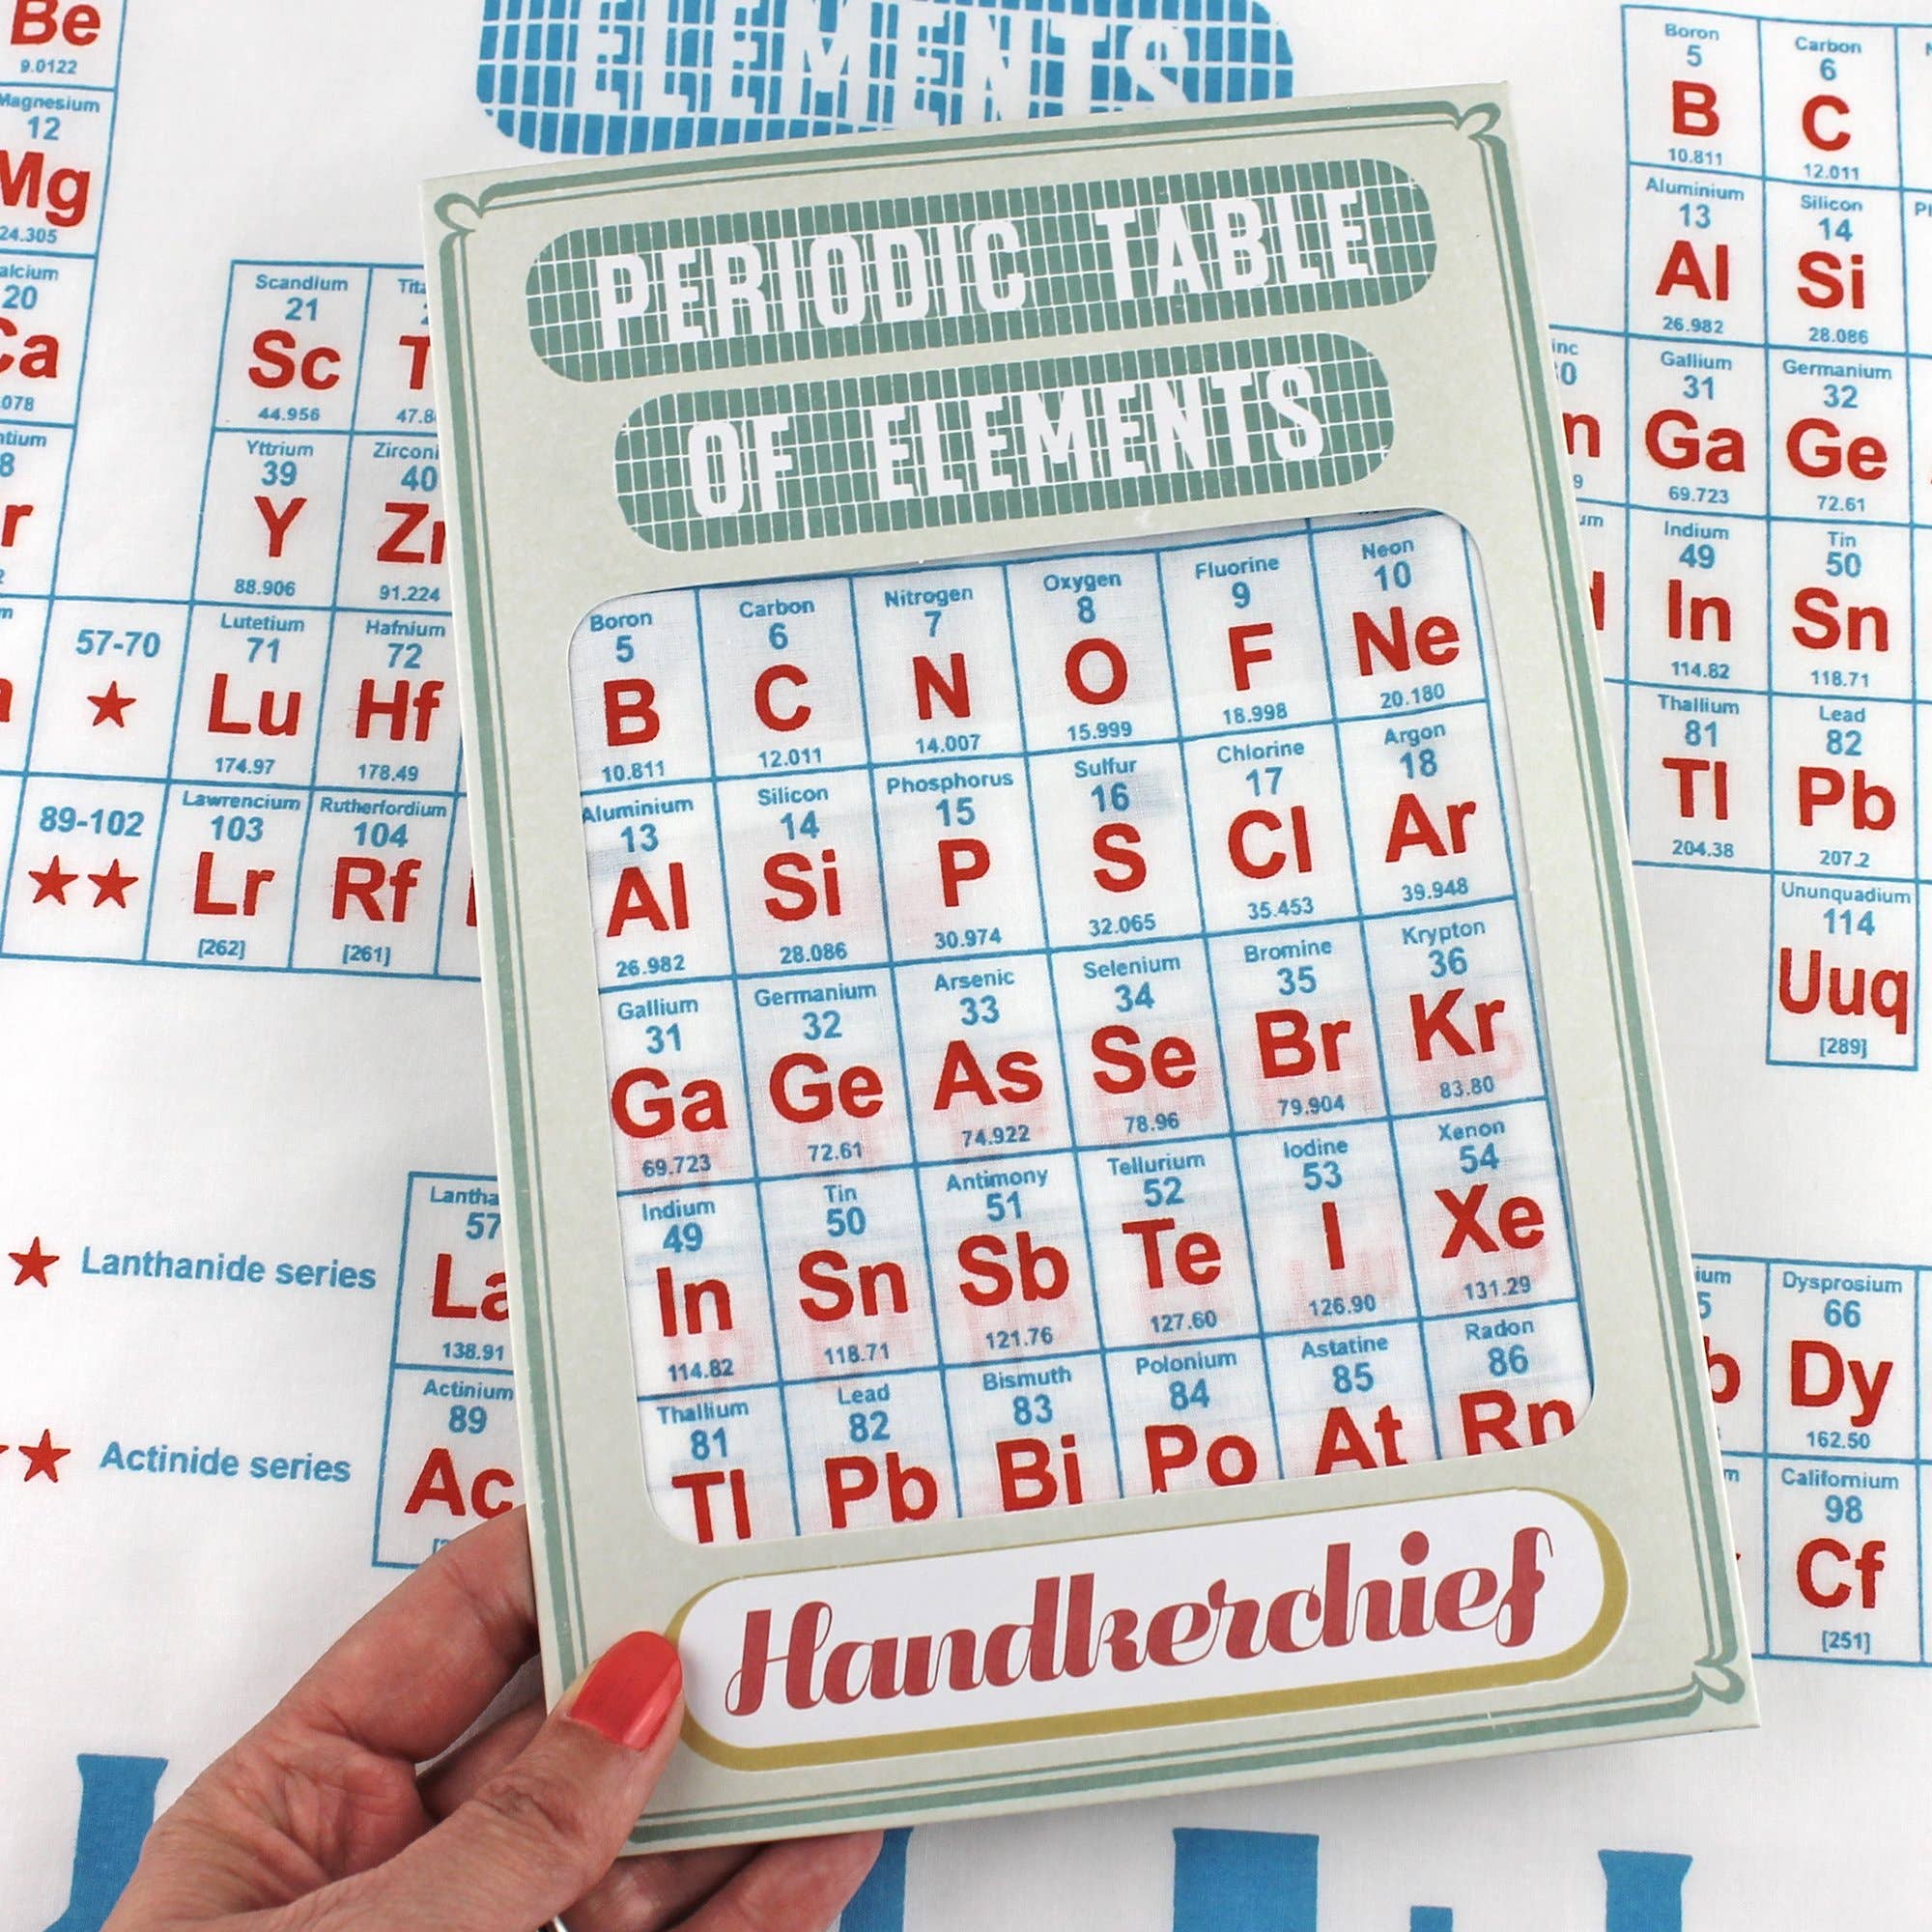 Periodic Table of Elements Handkerchief Pocket Square Bandana